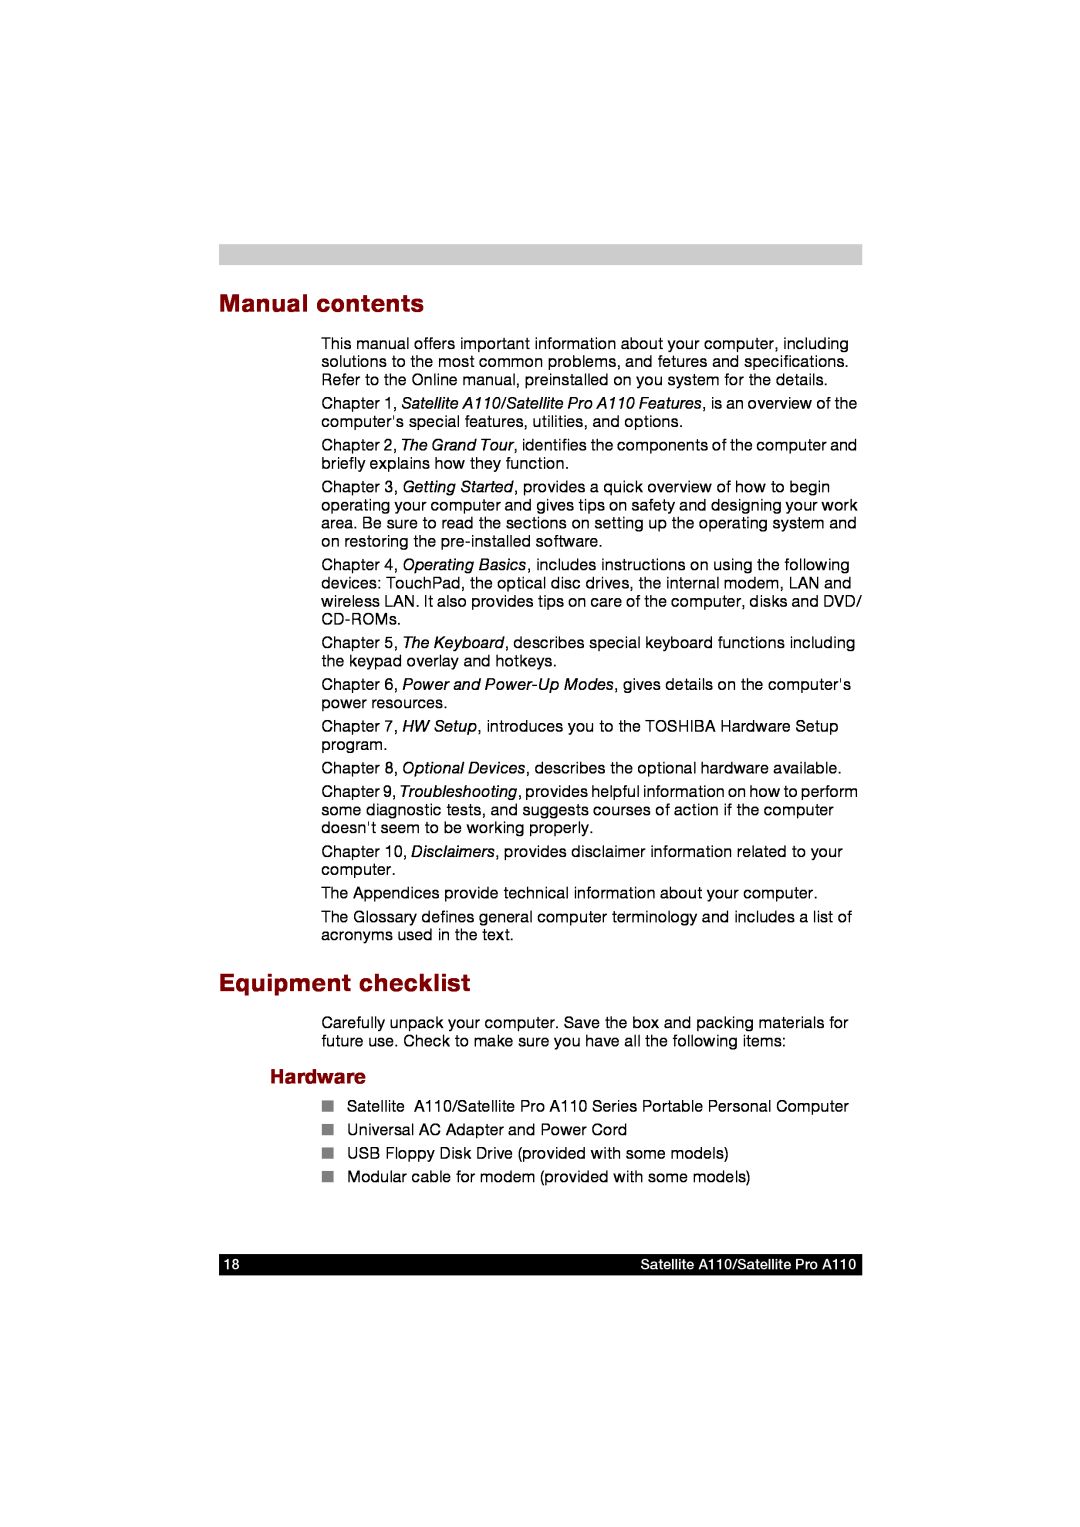 Toshiba A110 user manual Manual contents, Equipment checklist, Hardware 